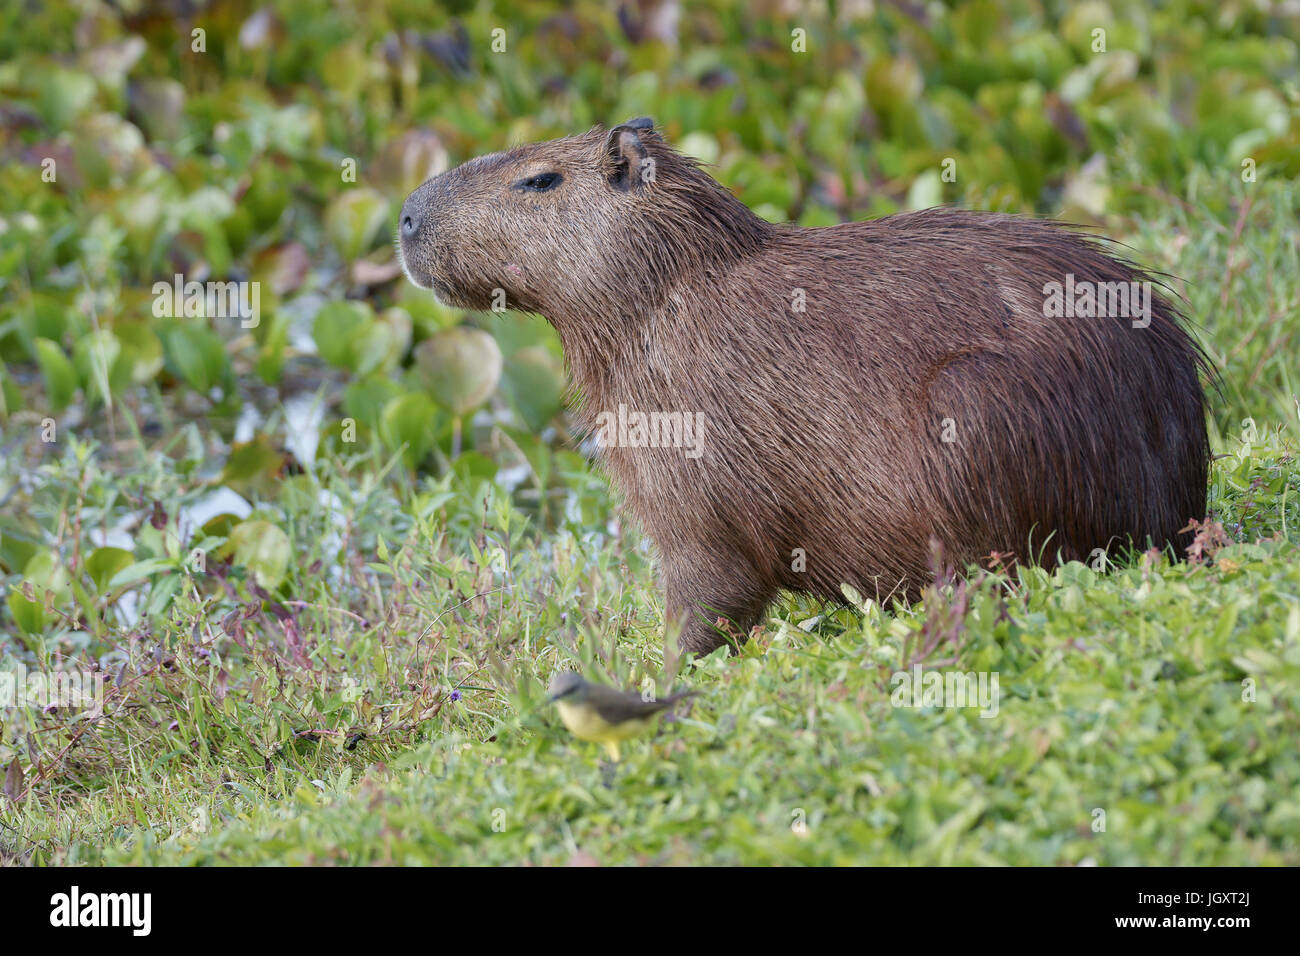 Animal, Capybara, Pantanal, Mato Grosso do Sul, Brazil Stock Photo